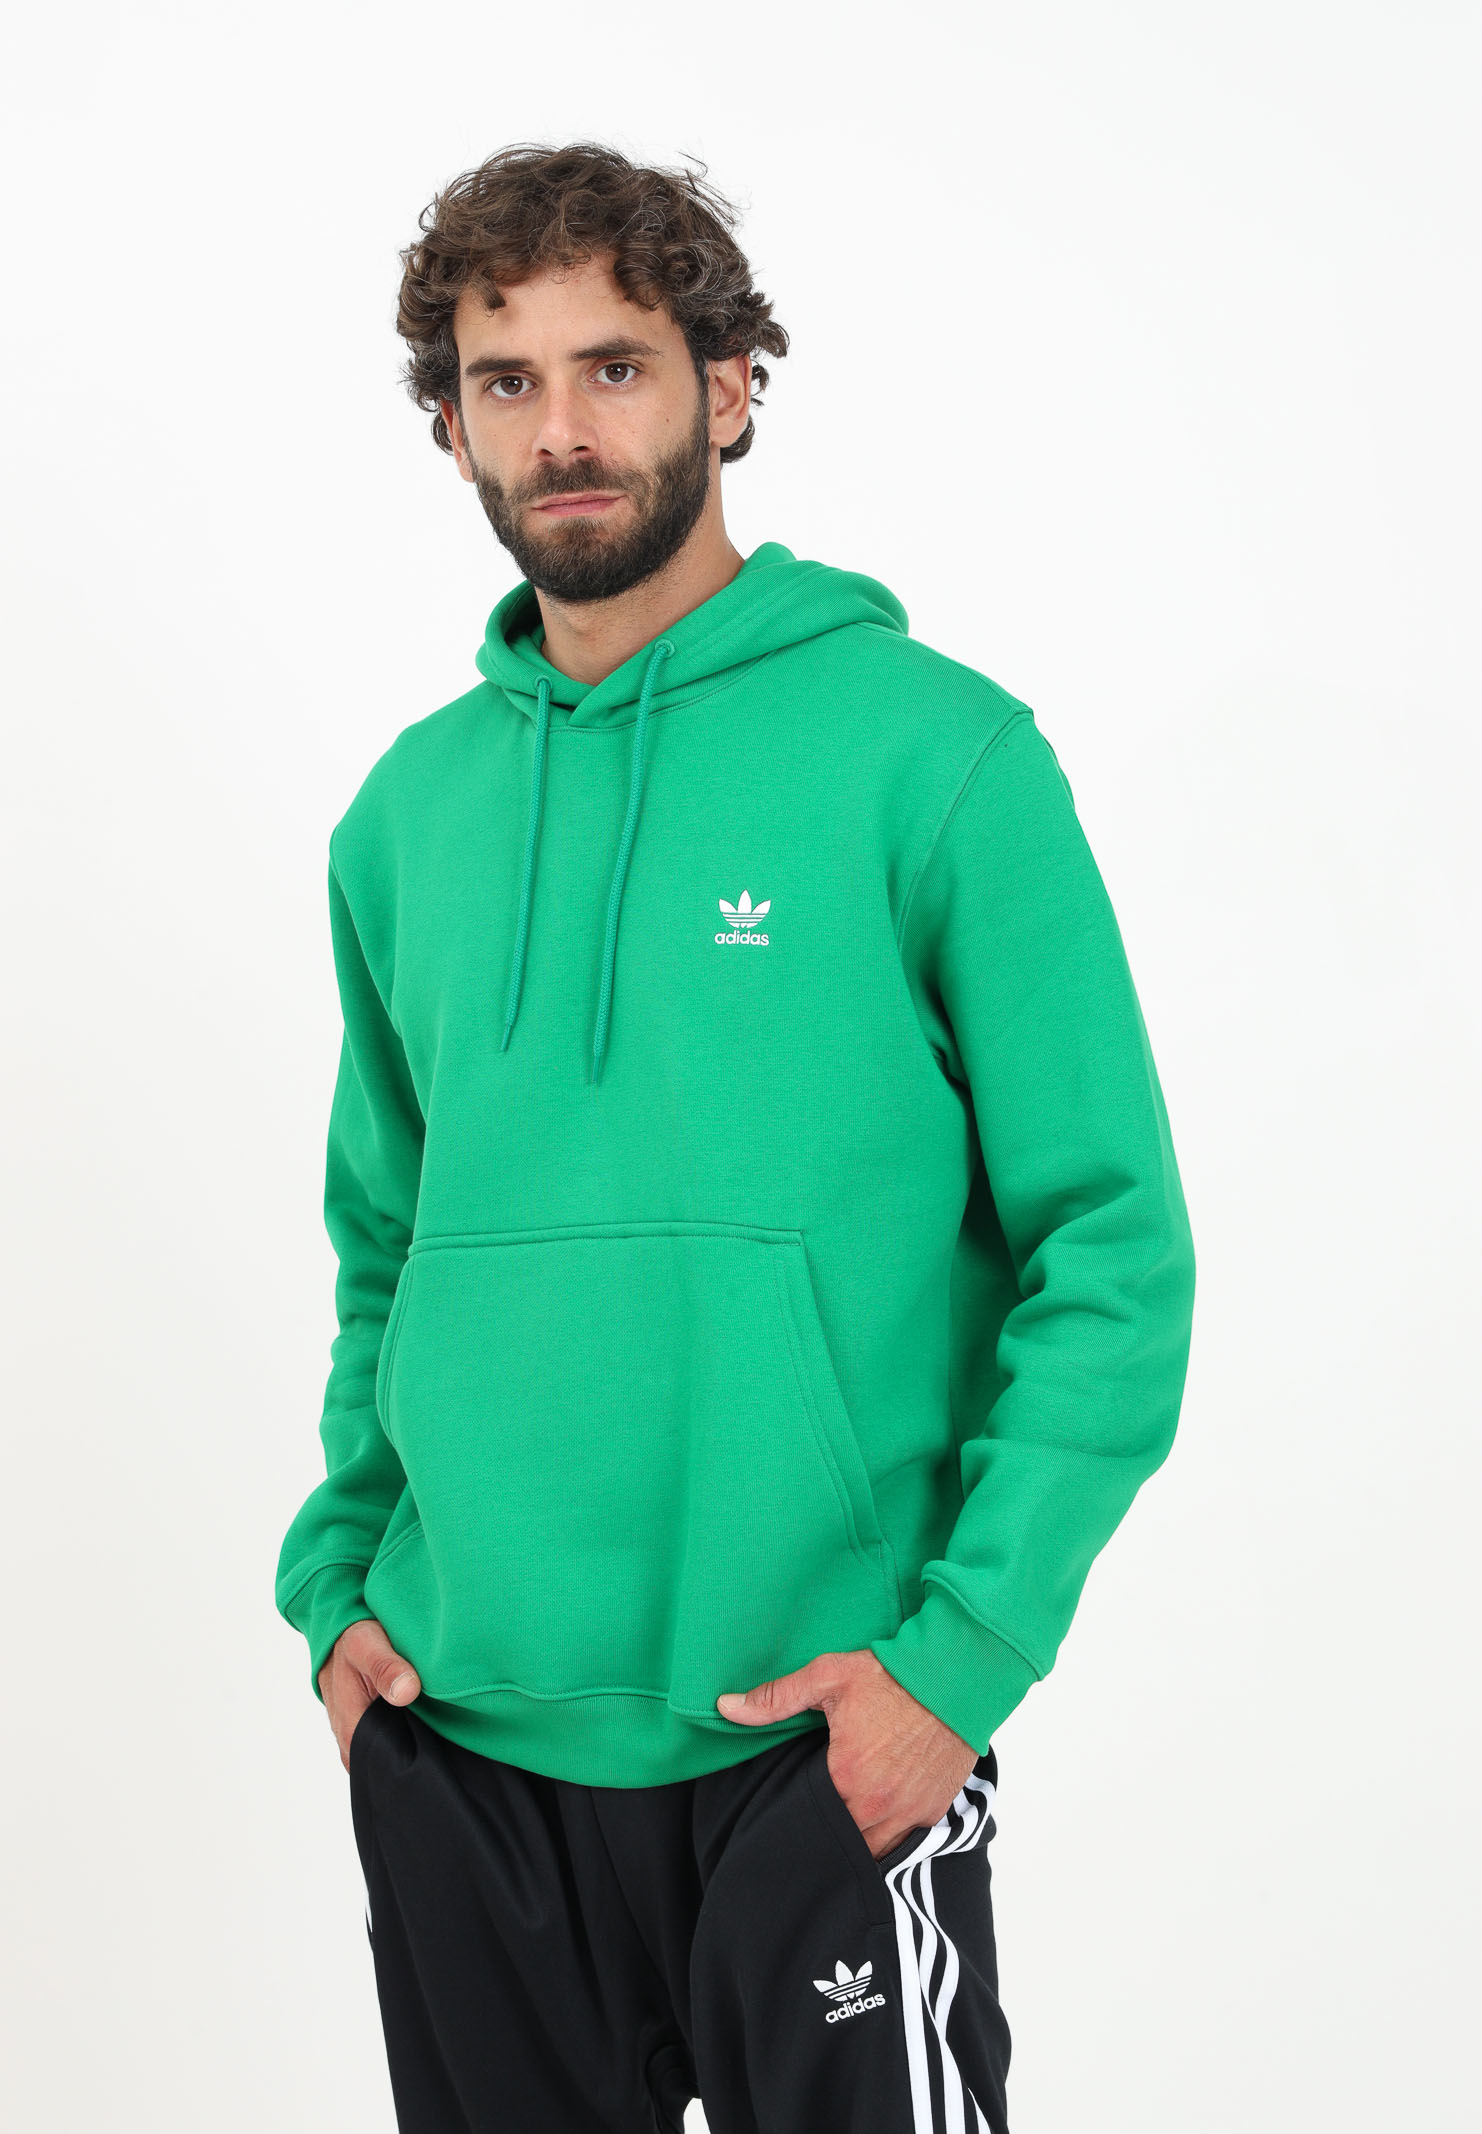 ugentlig Hammer Utilfreds Trefoil Essentials green hooded sweatshirt for men - ADIDAS ORIGINALS -  Pavidas